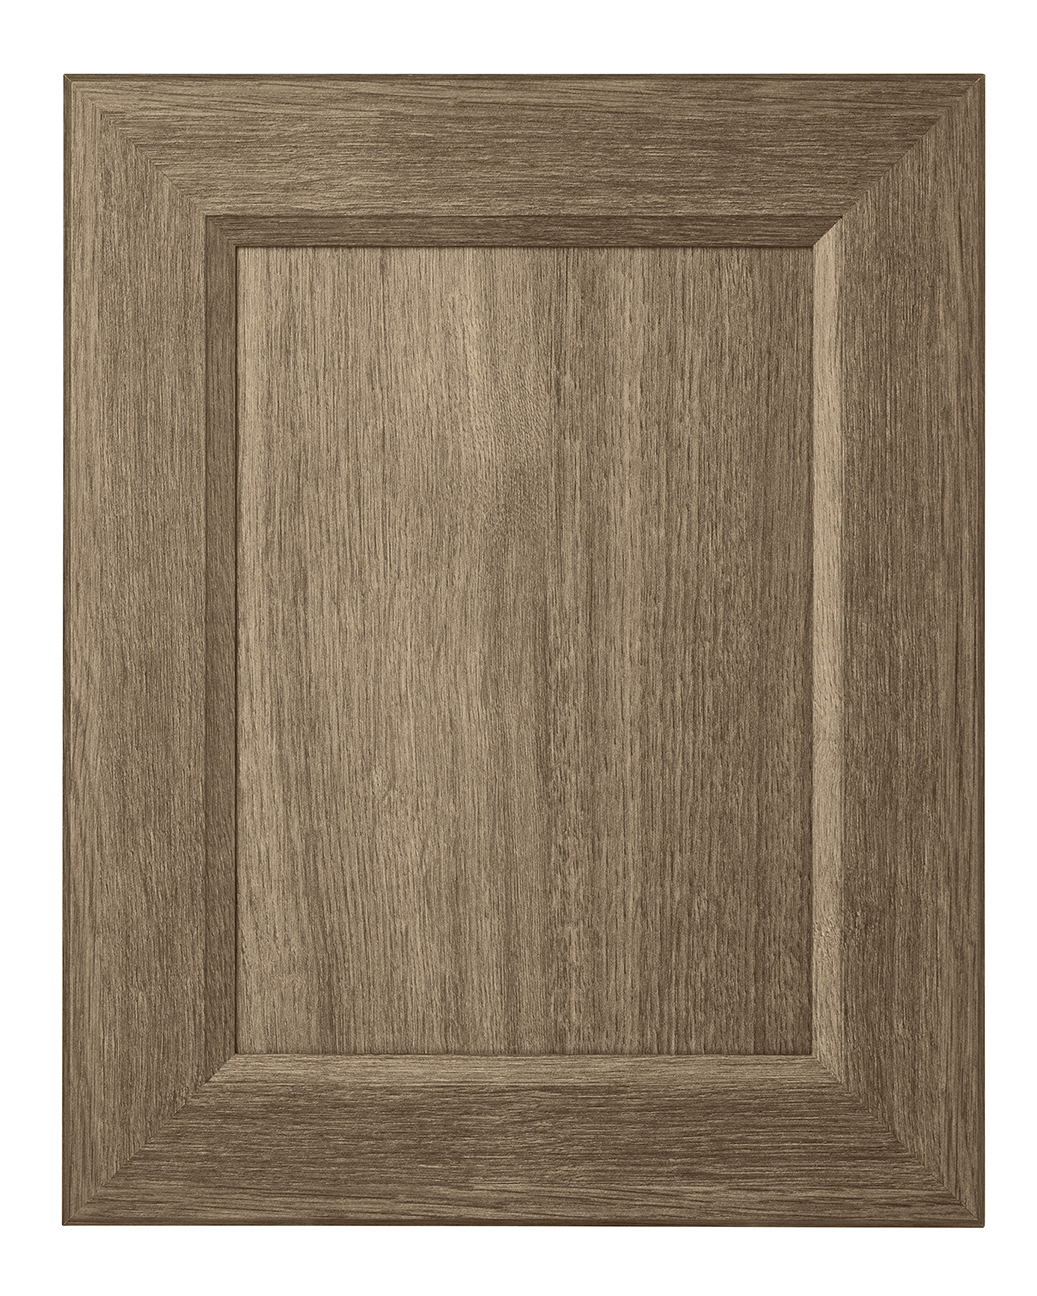 Beta cabinet door in Tafisa 582 Fashionista